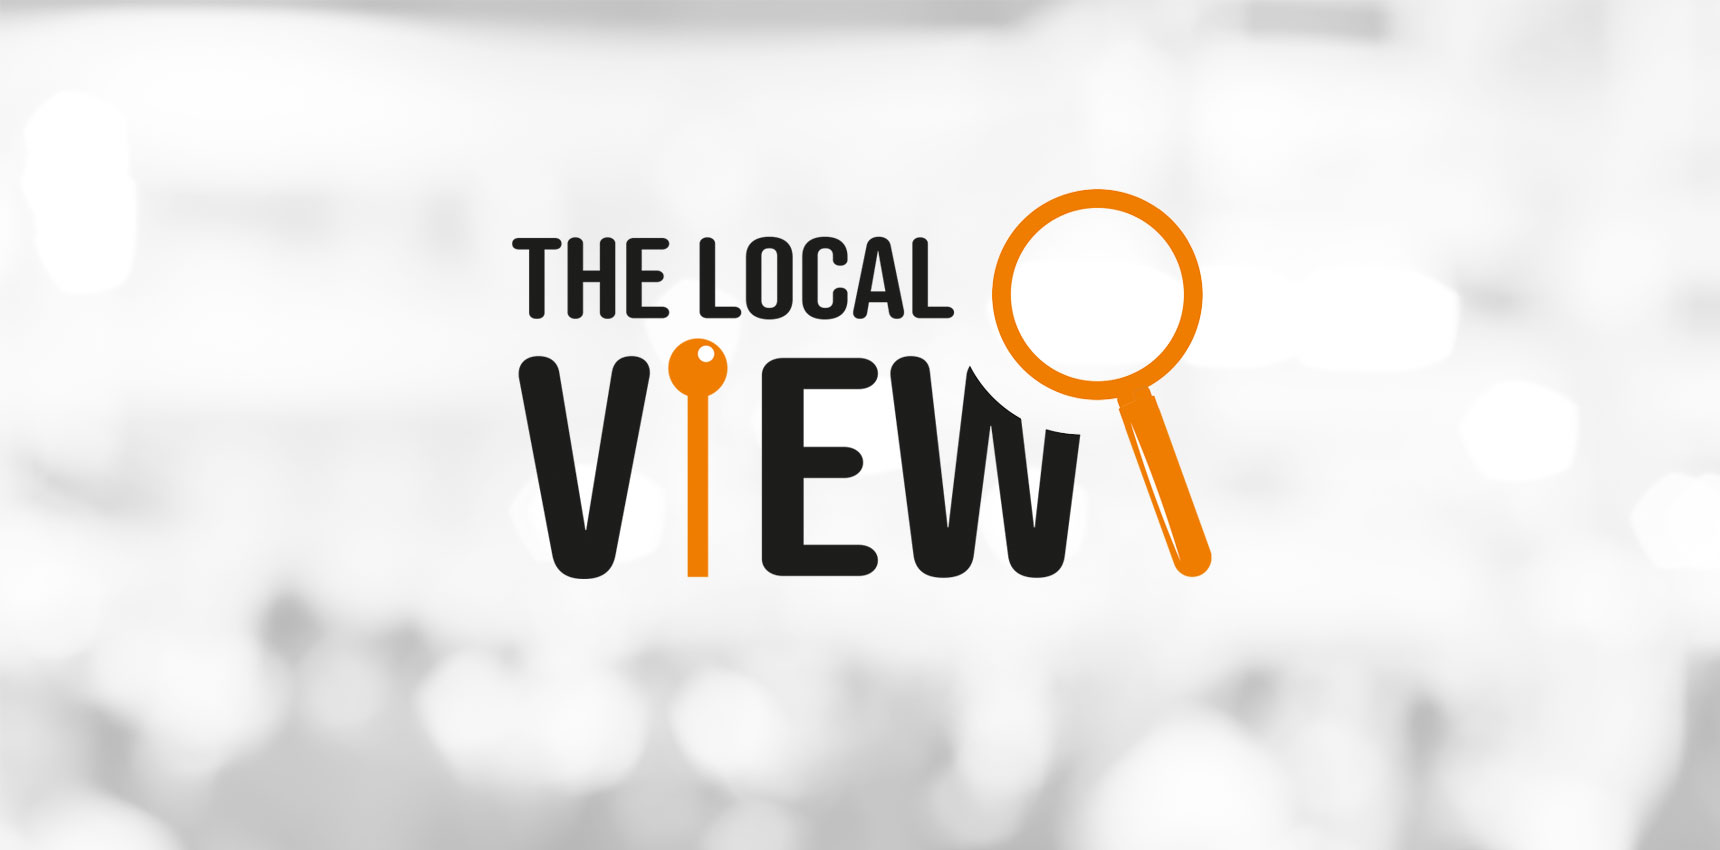 The Local View Rebrand